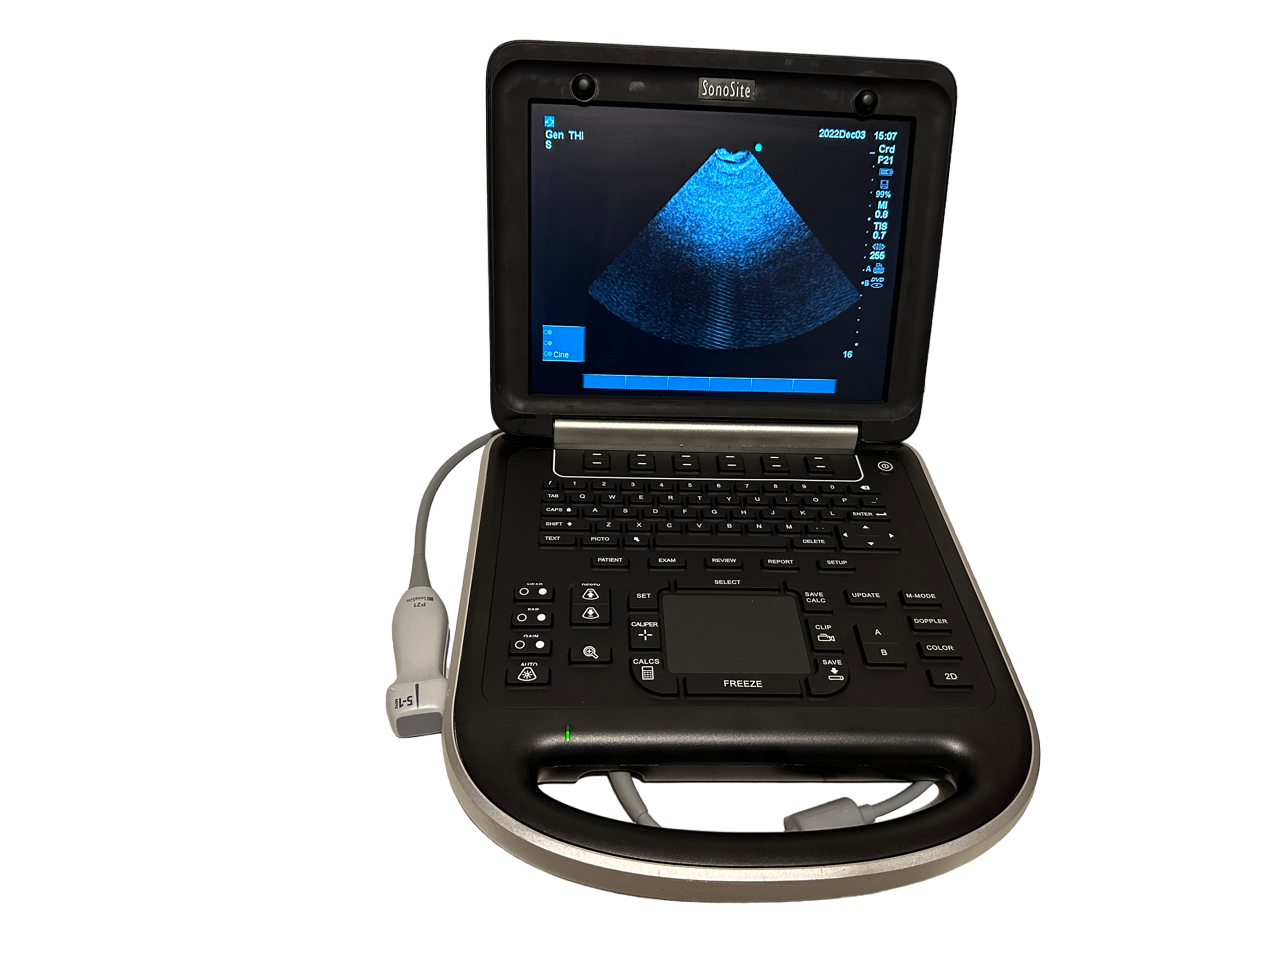 Sonosite Edge Portable Ultrasound 2015 & Cardiac Probes P21x DIAGNOSTIC ULTRASOUND MACHINES FOR SALE